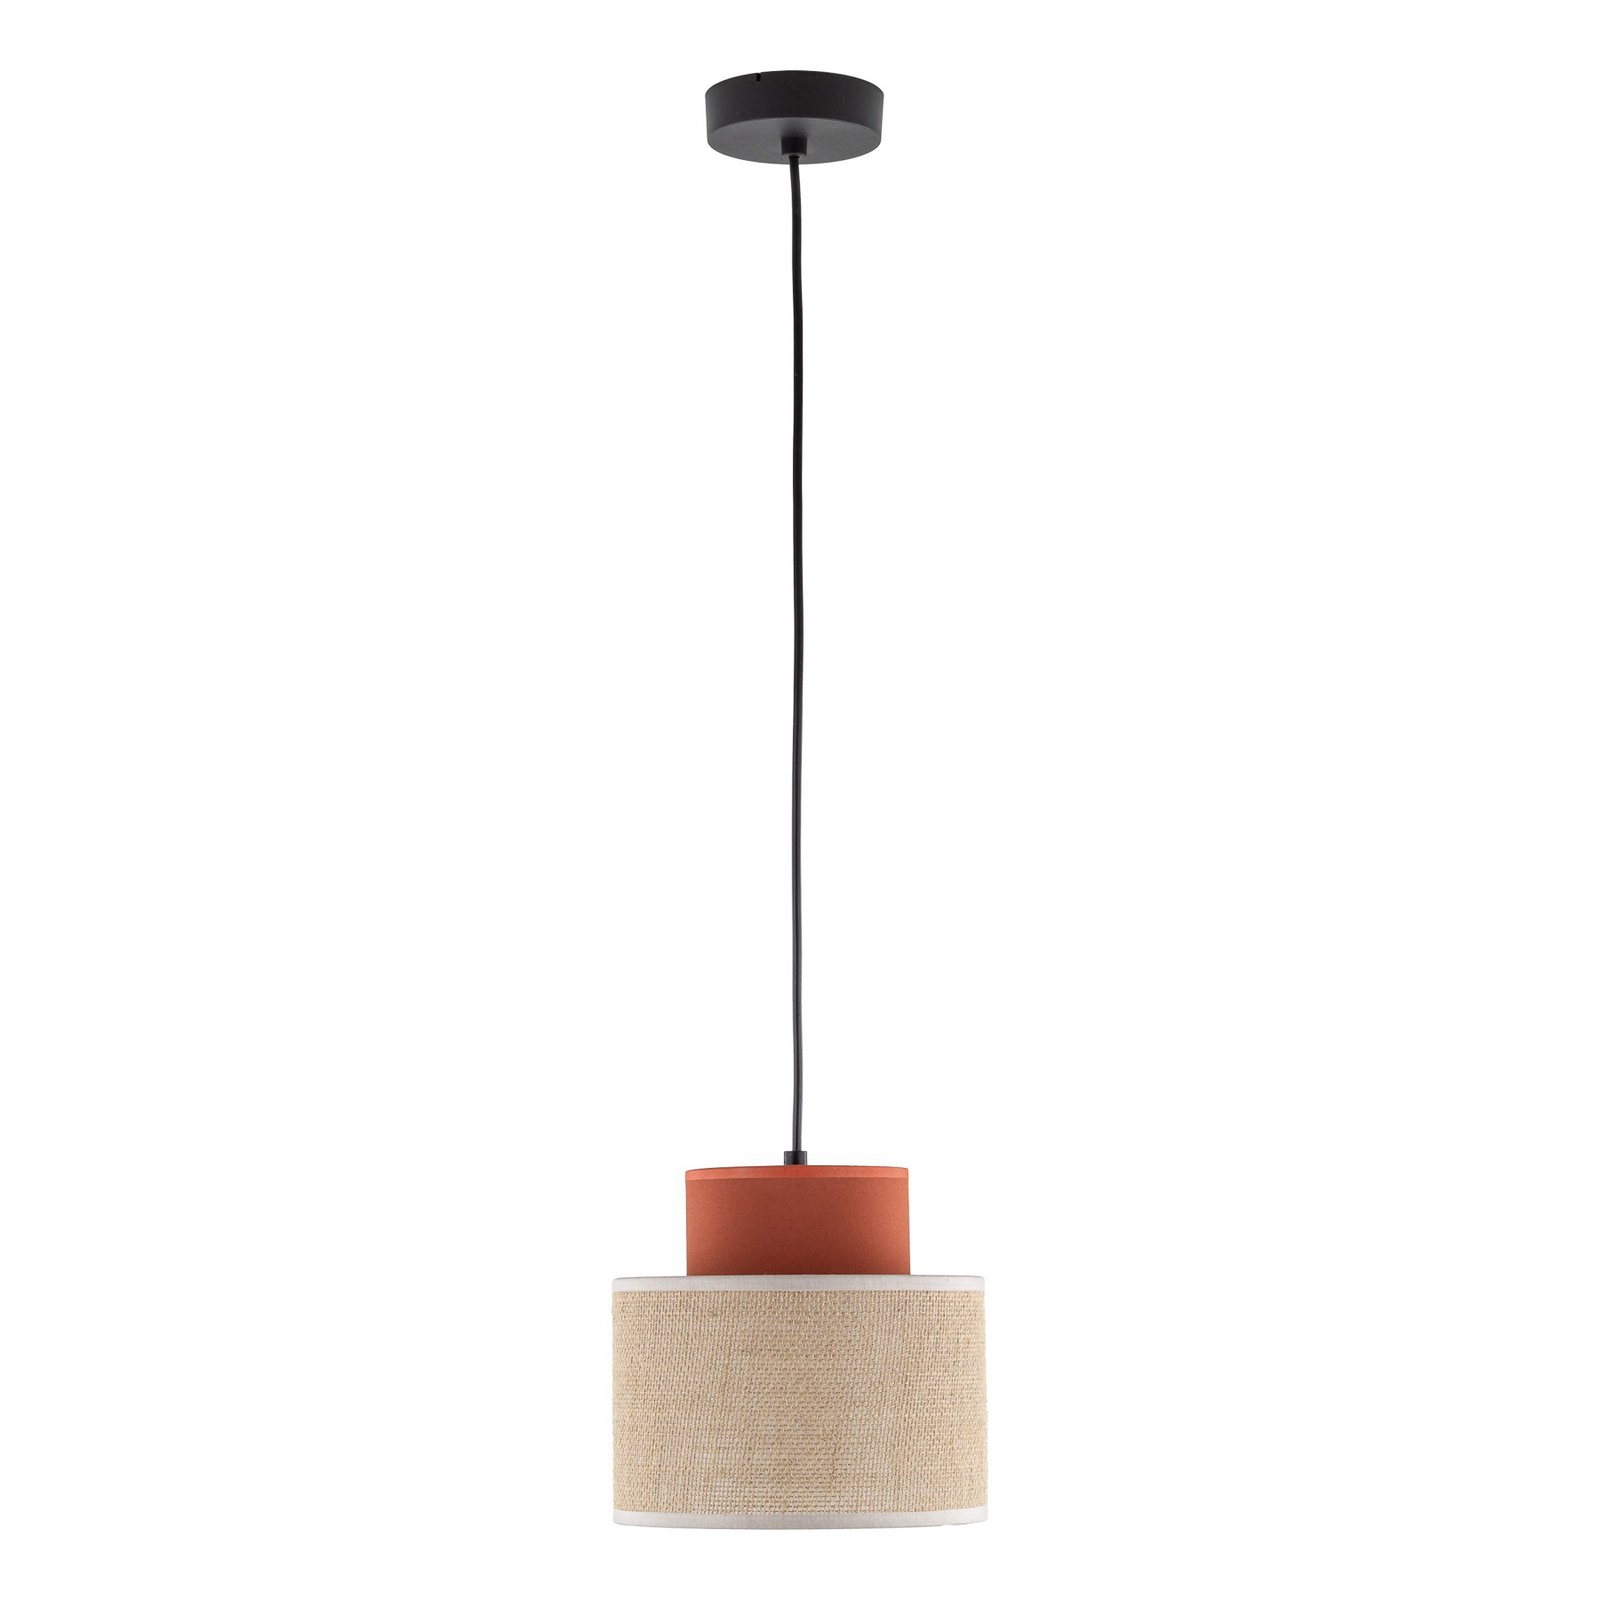 Duo hanglamp, jute kap, roestbruin/natuurbruin, Ø 20 cm